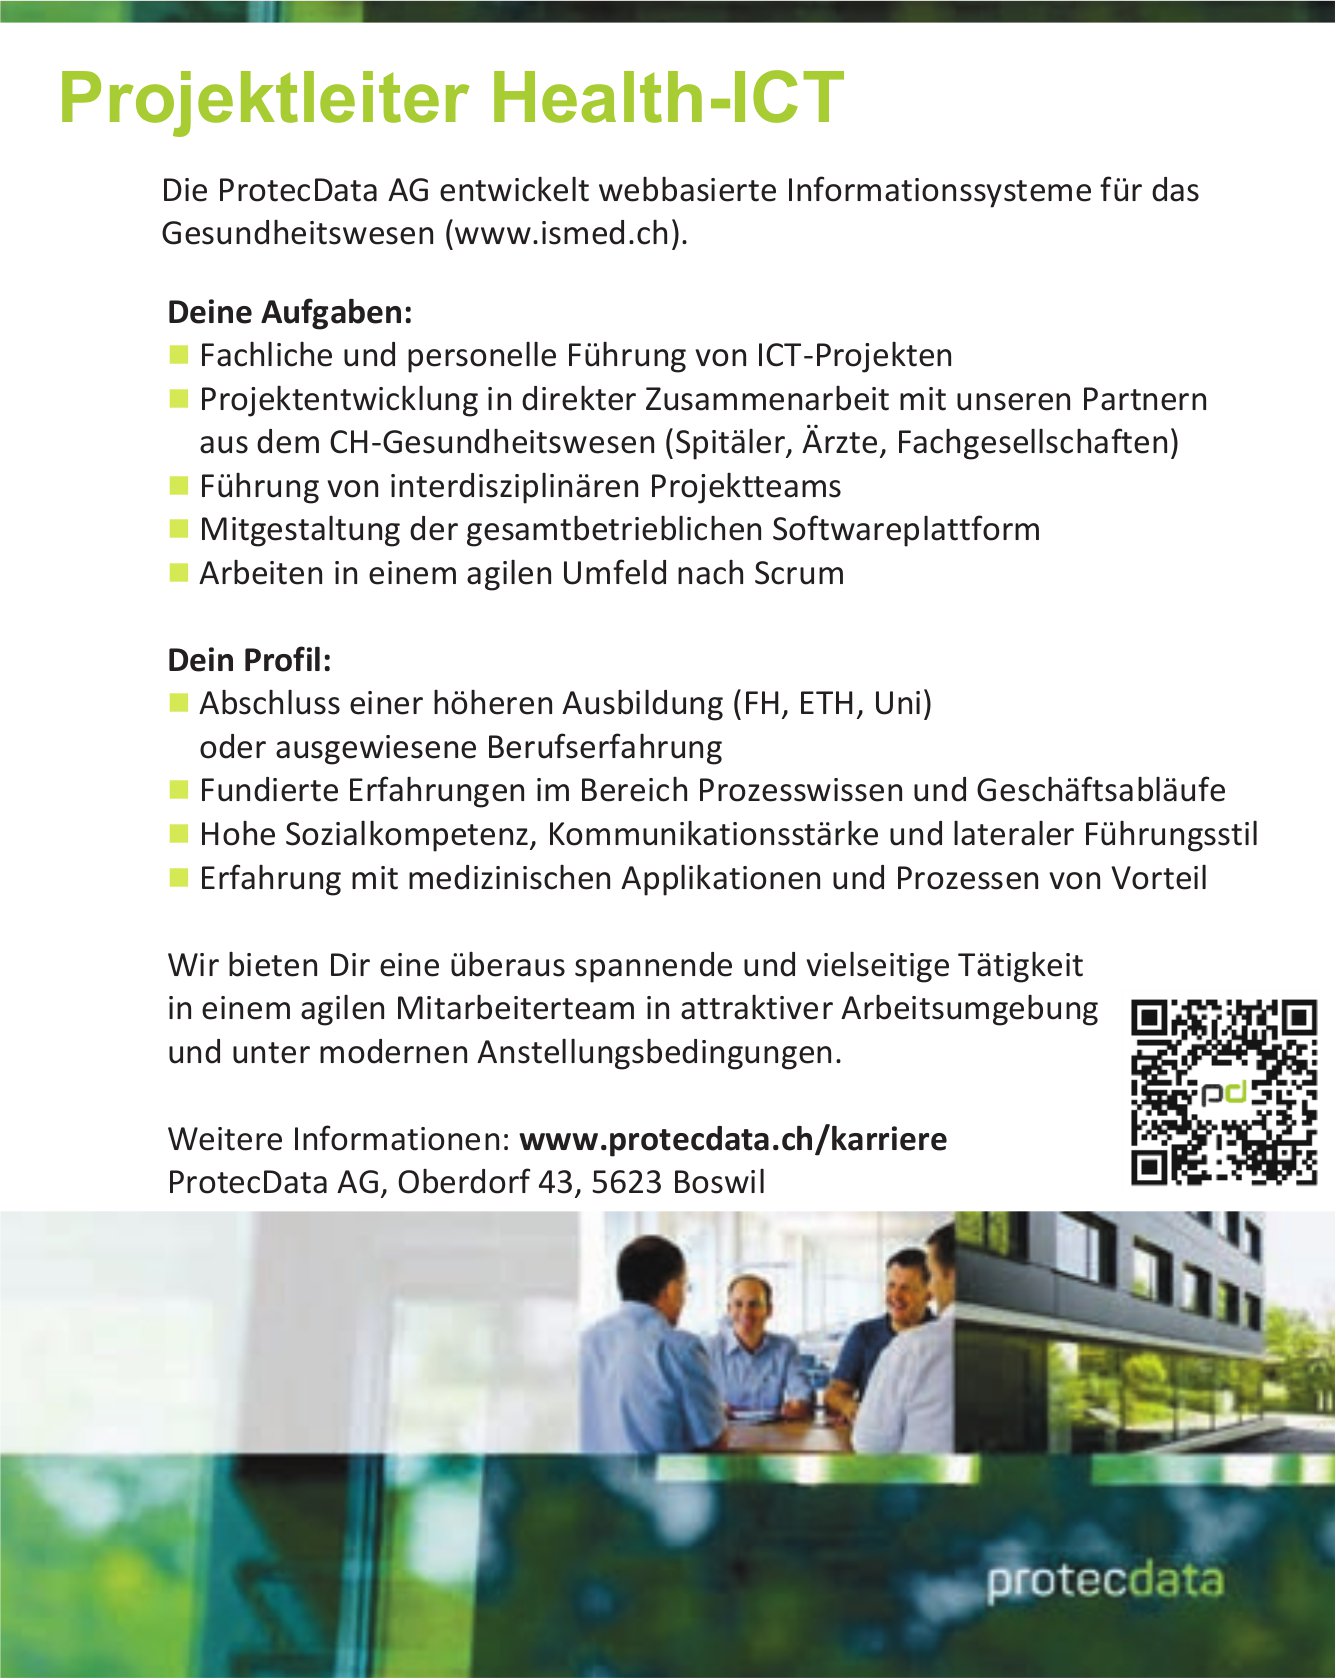 Projektleiter Health-ICT, ProtecData AG, Boswil, gesucht